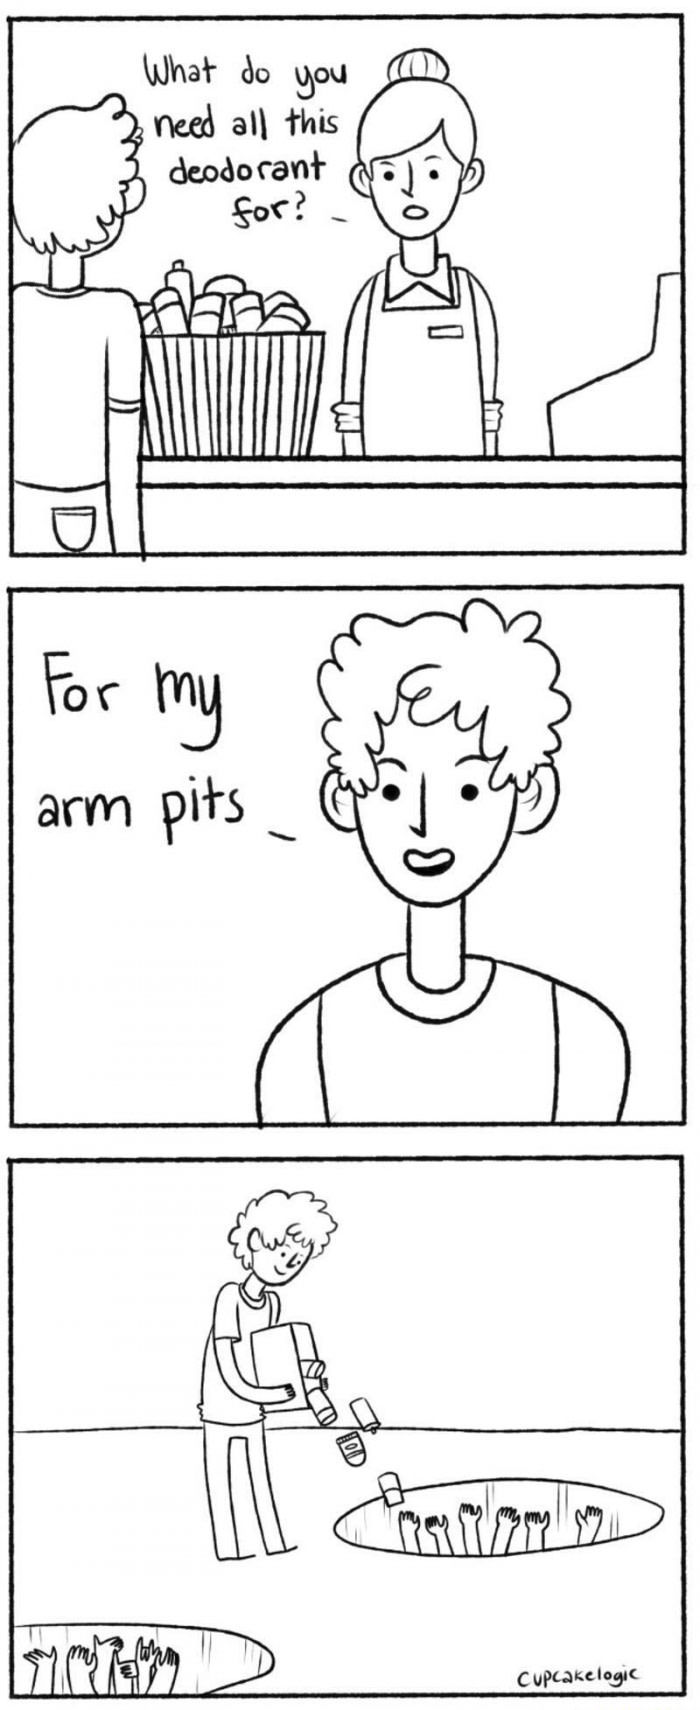 my armpits stink - meme